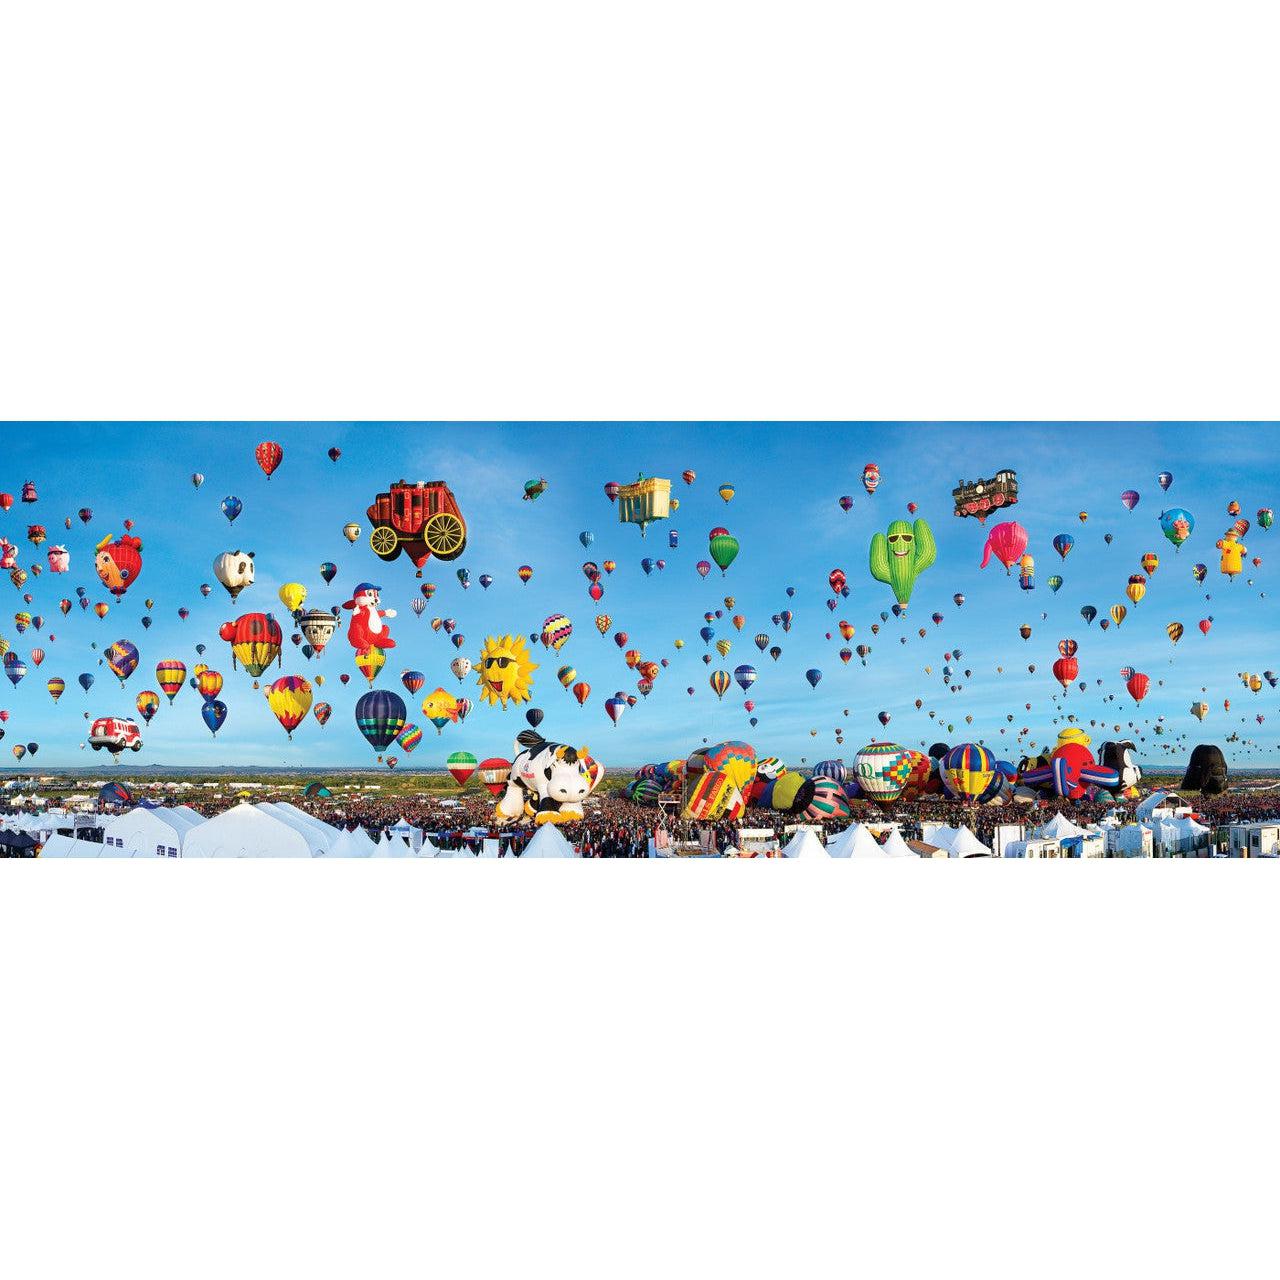 Blakeway Panoramas - Albuquerque Balloons - 1000 Piece Panoramic Puzzl